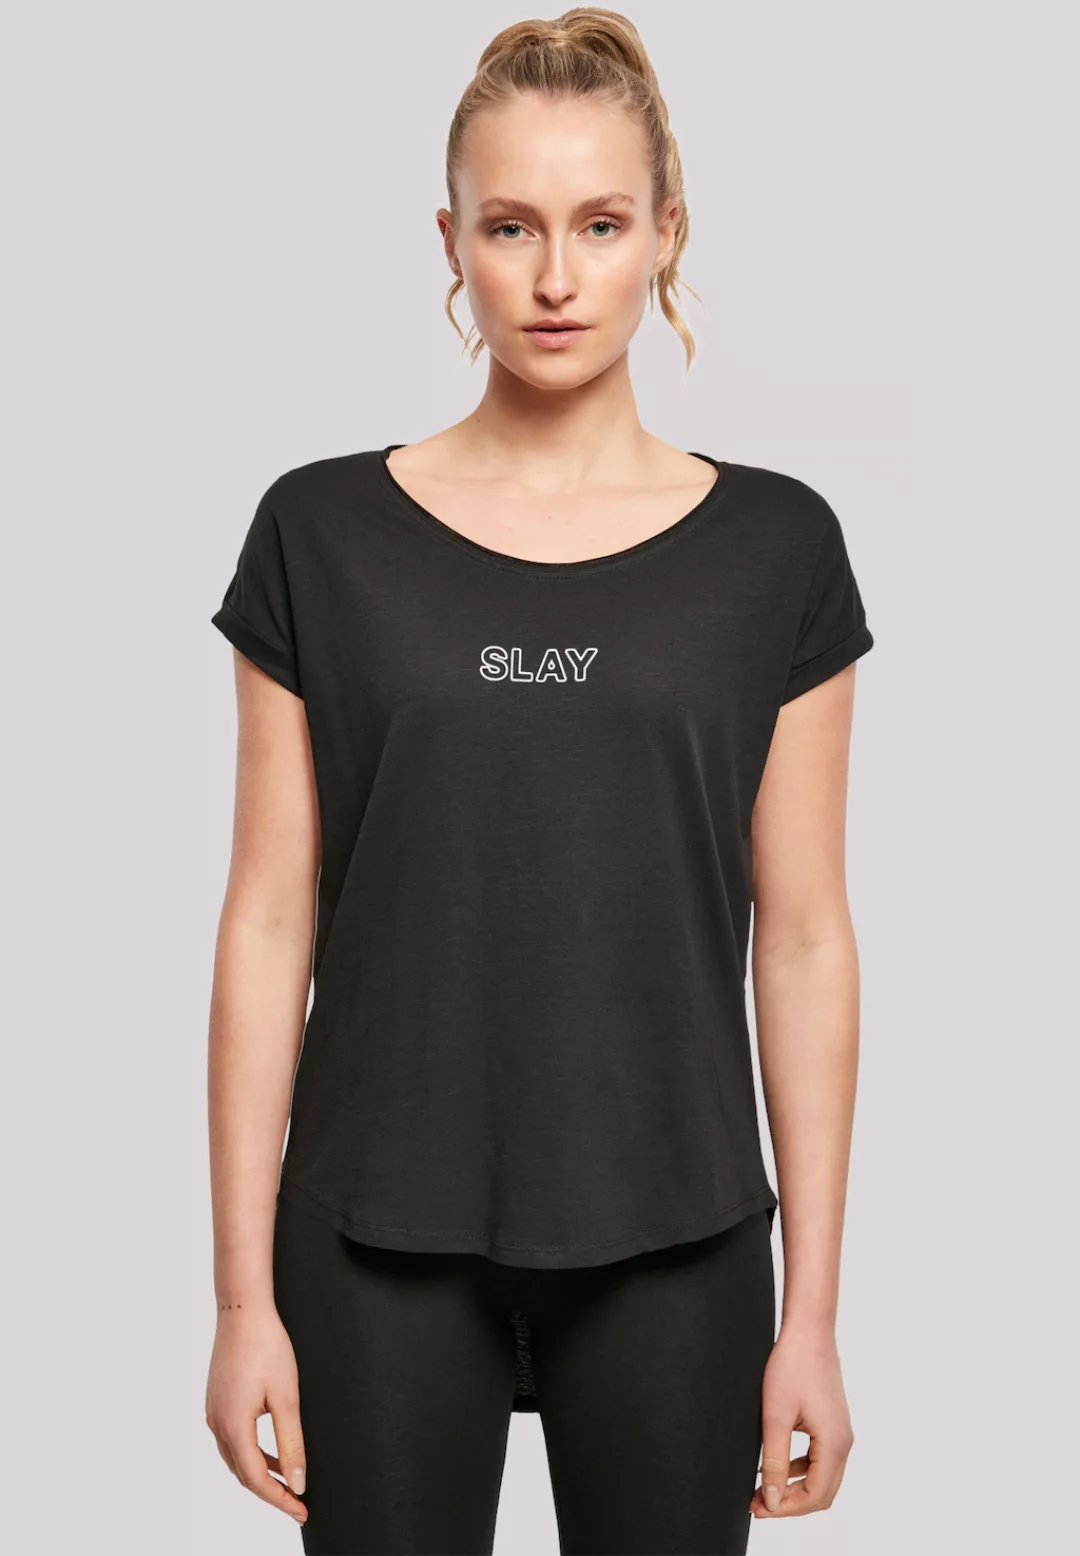 F4NT4STIC T-Shirt "Slay", Jugendwort 2022, slang, lang geschnitten günstig online kaufen